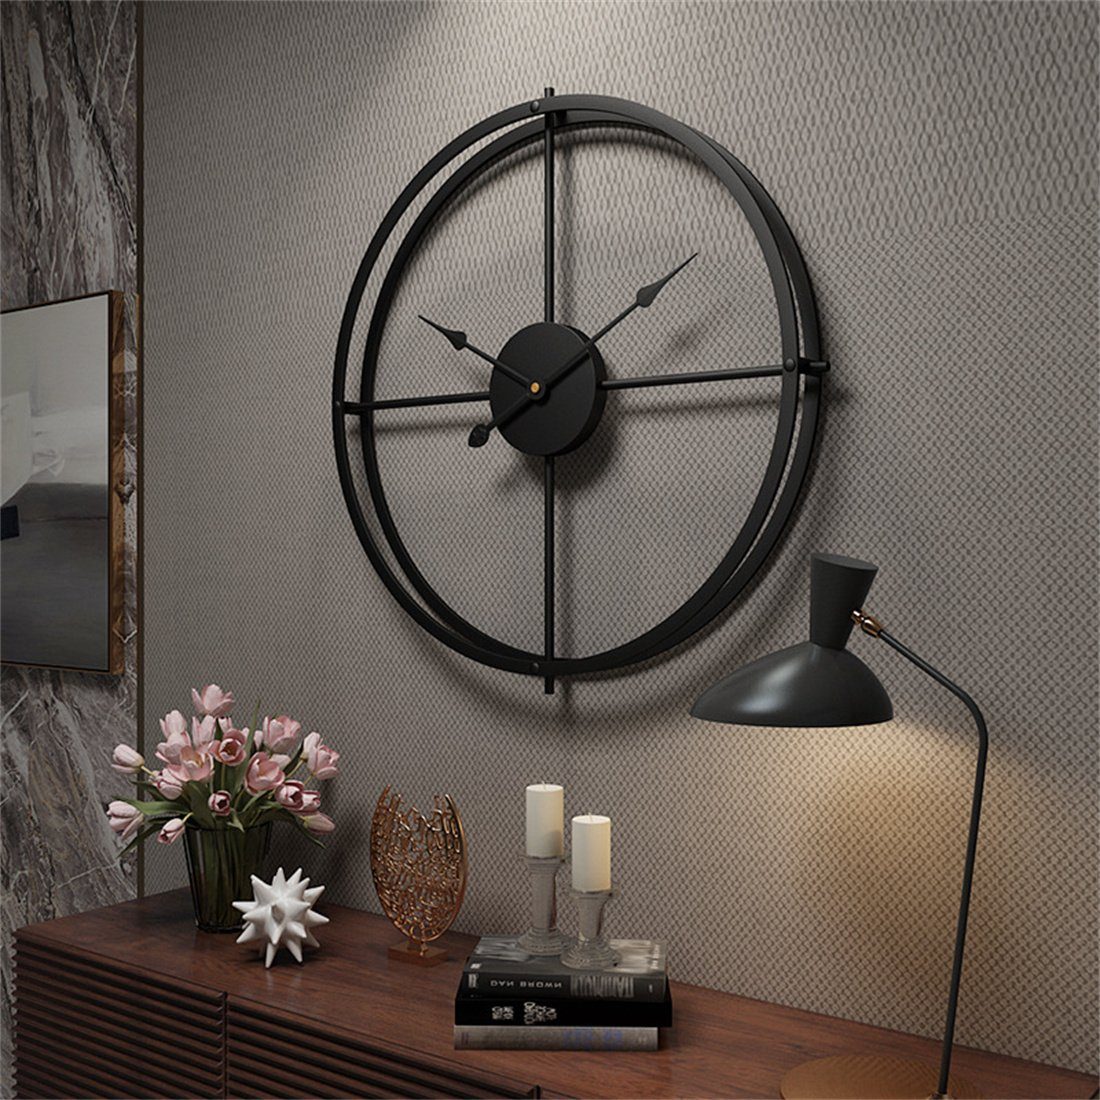 Wanduhr Wanduhr 40cm aus Moderne stille Eisen, kreative Schwarz DÖRÖY Uhr,Wanduhr Metall aus